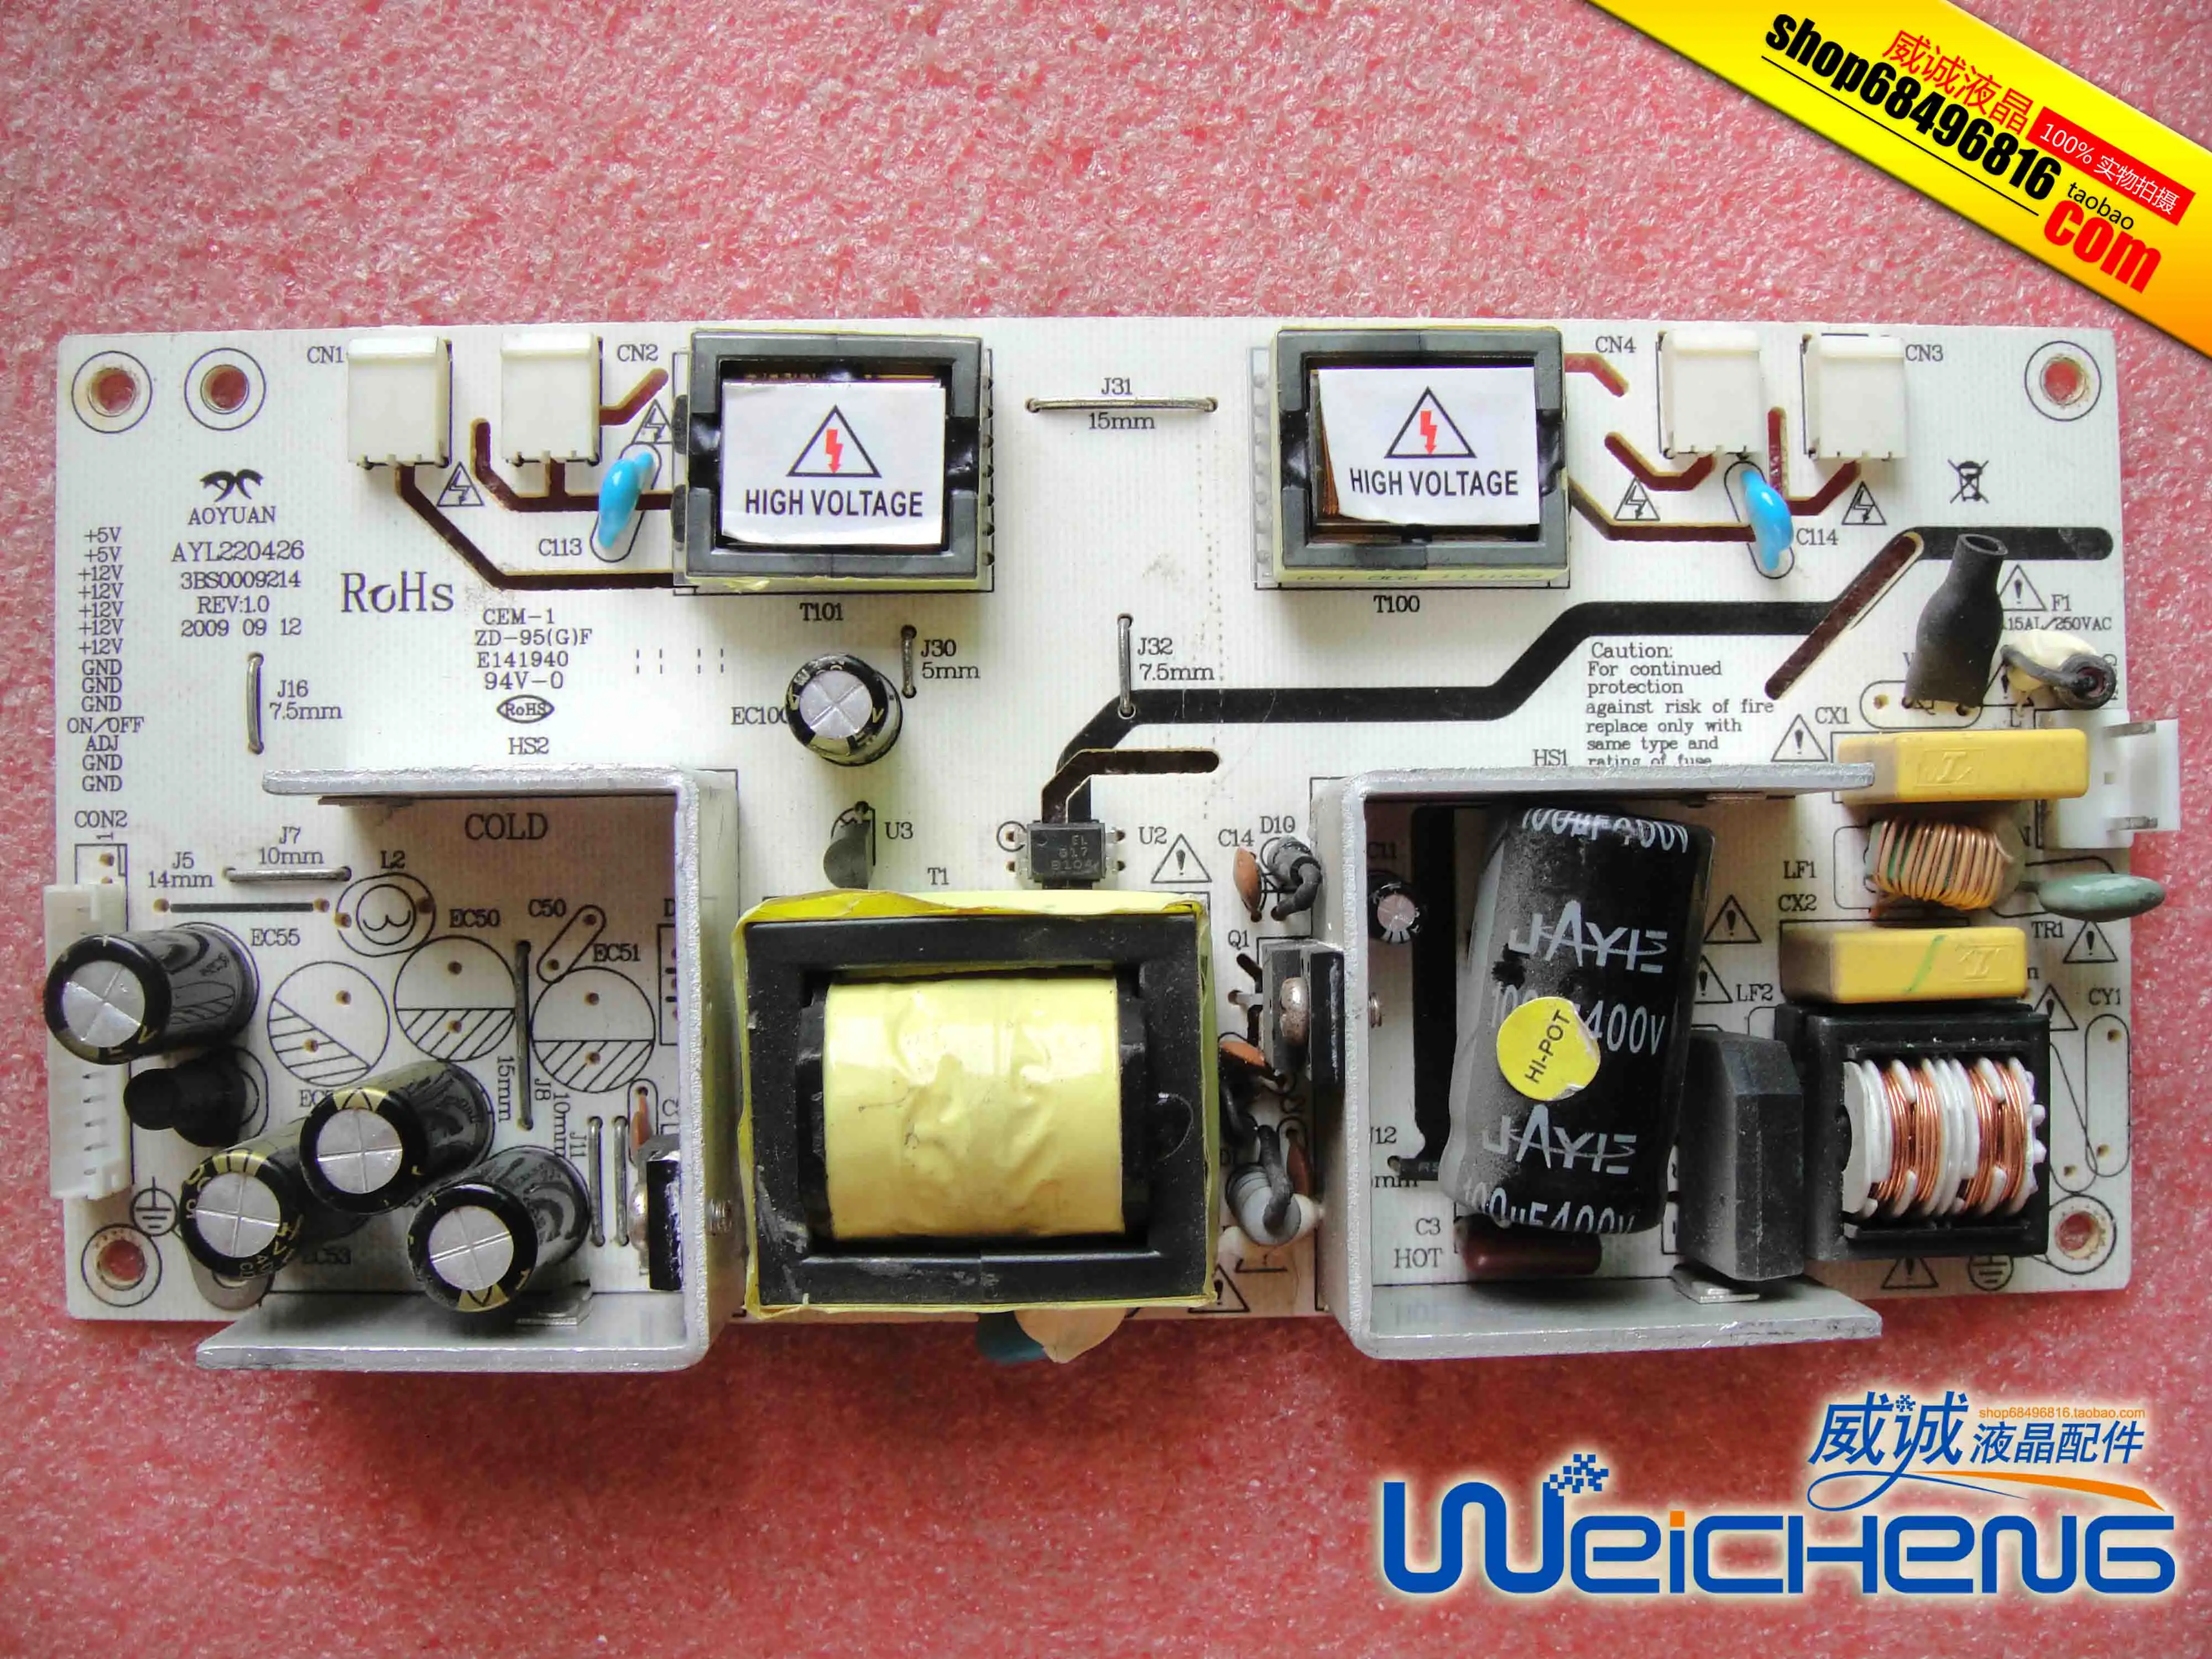 

AYL220426 12V high voltage board 3BS0009214 power board E141940